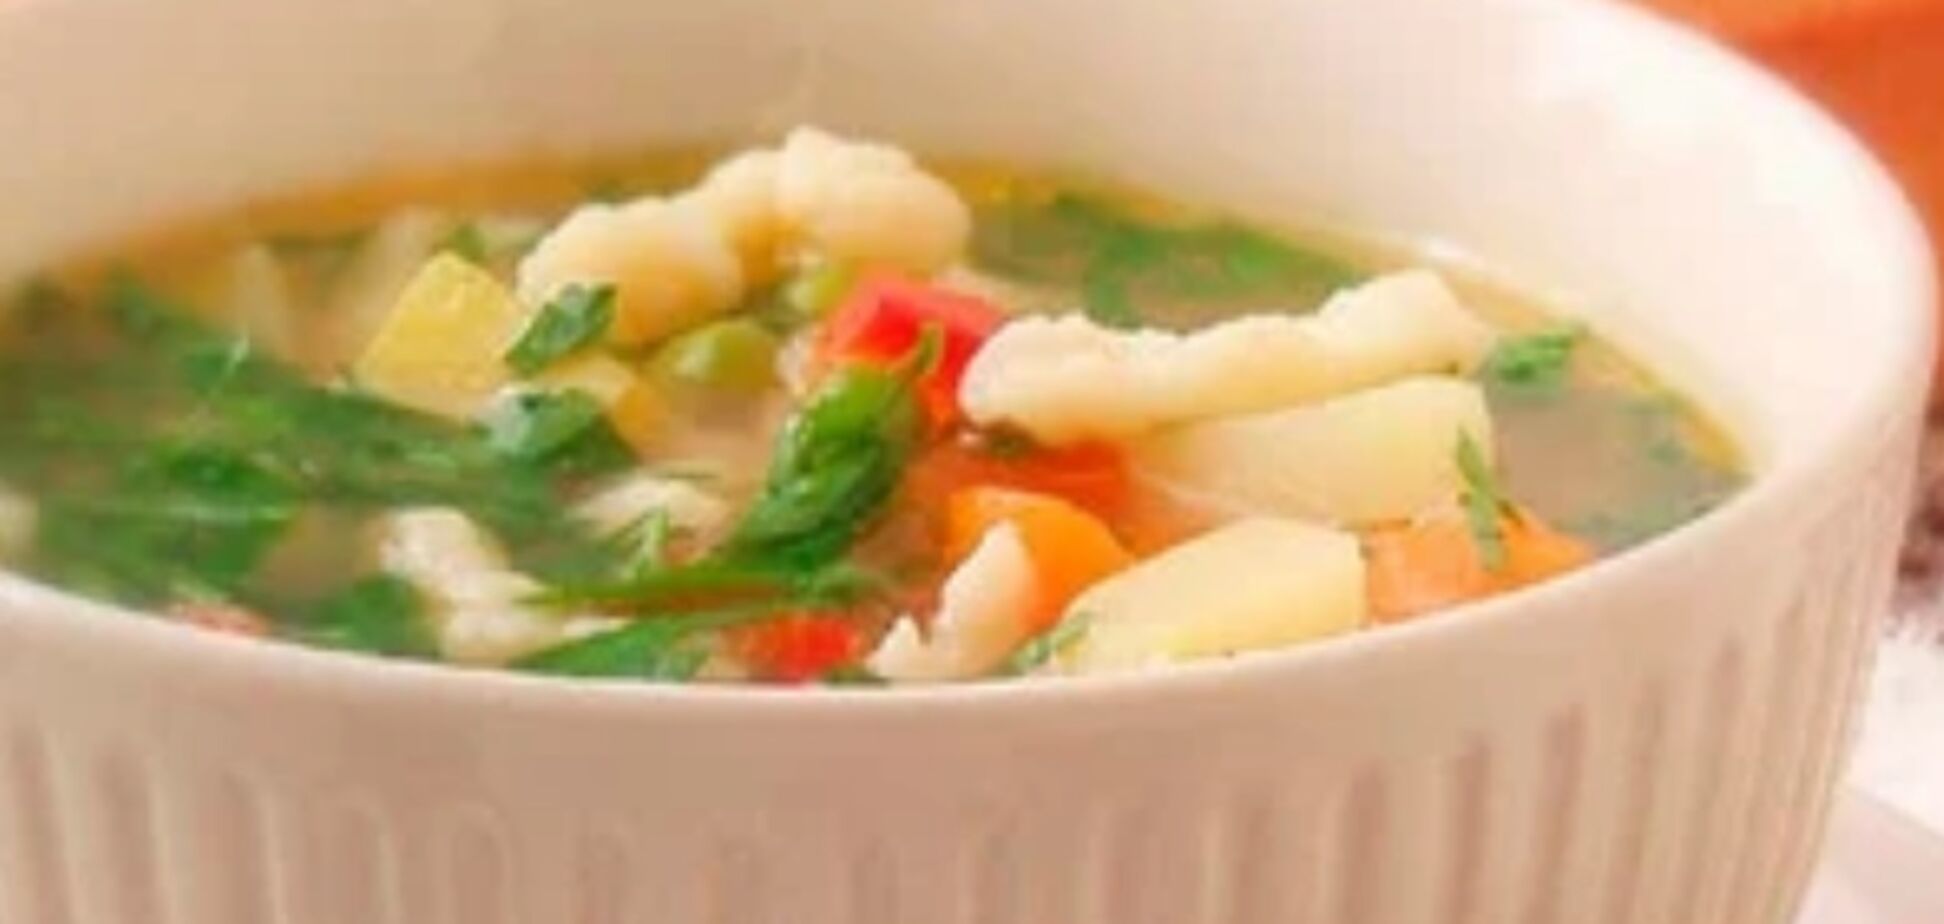 Рецепт невероятно вкусного овощного супа без зажарки